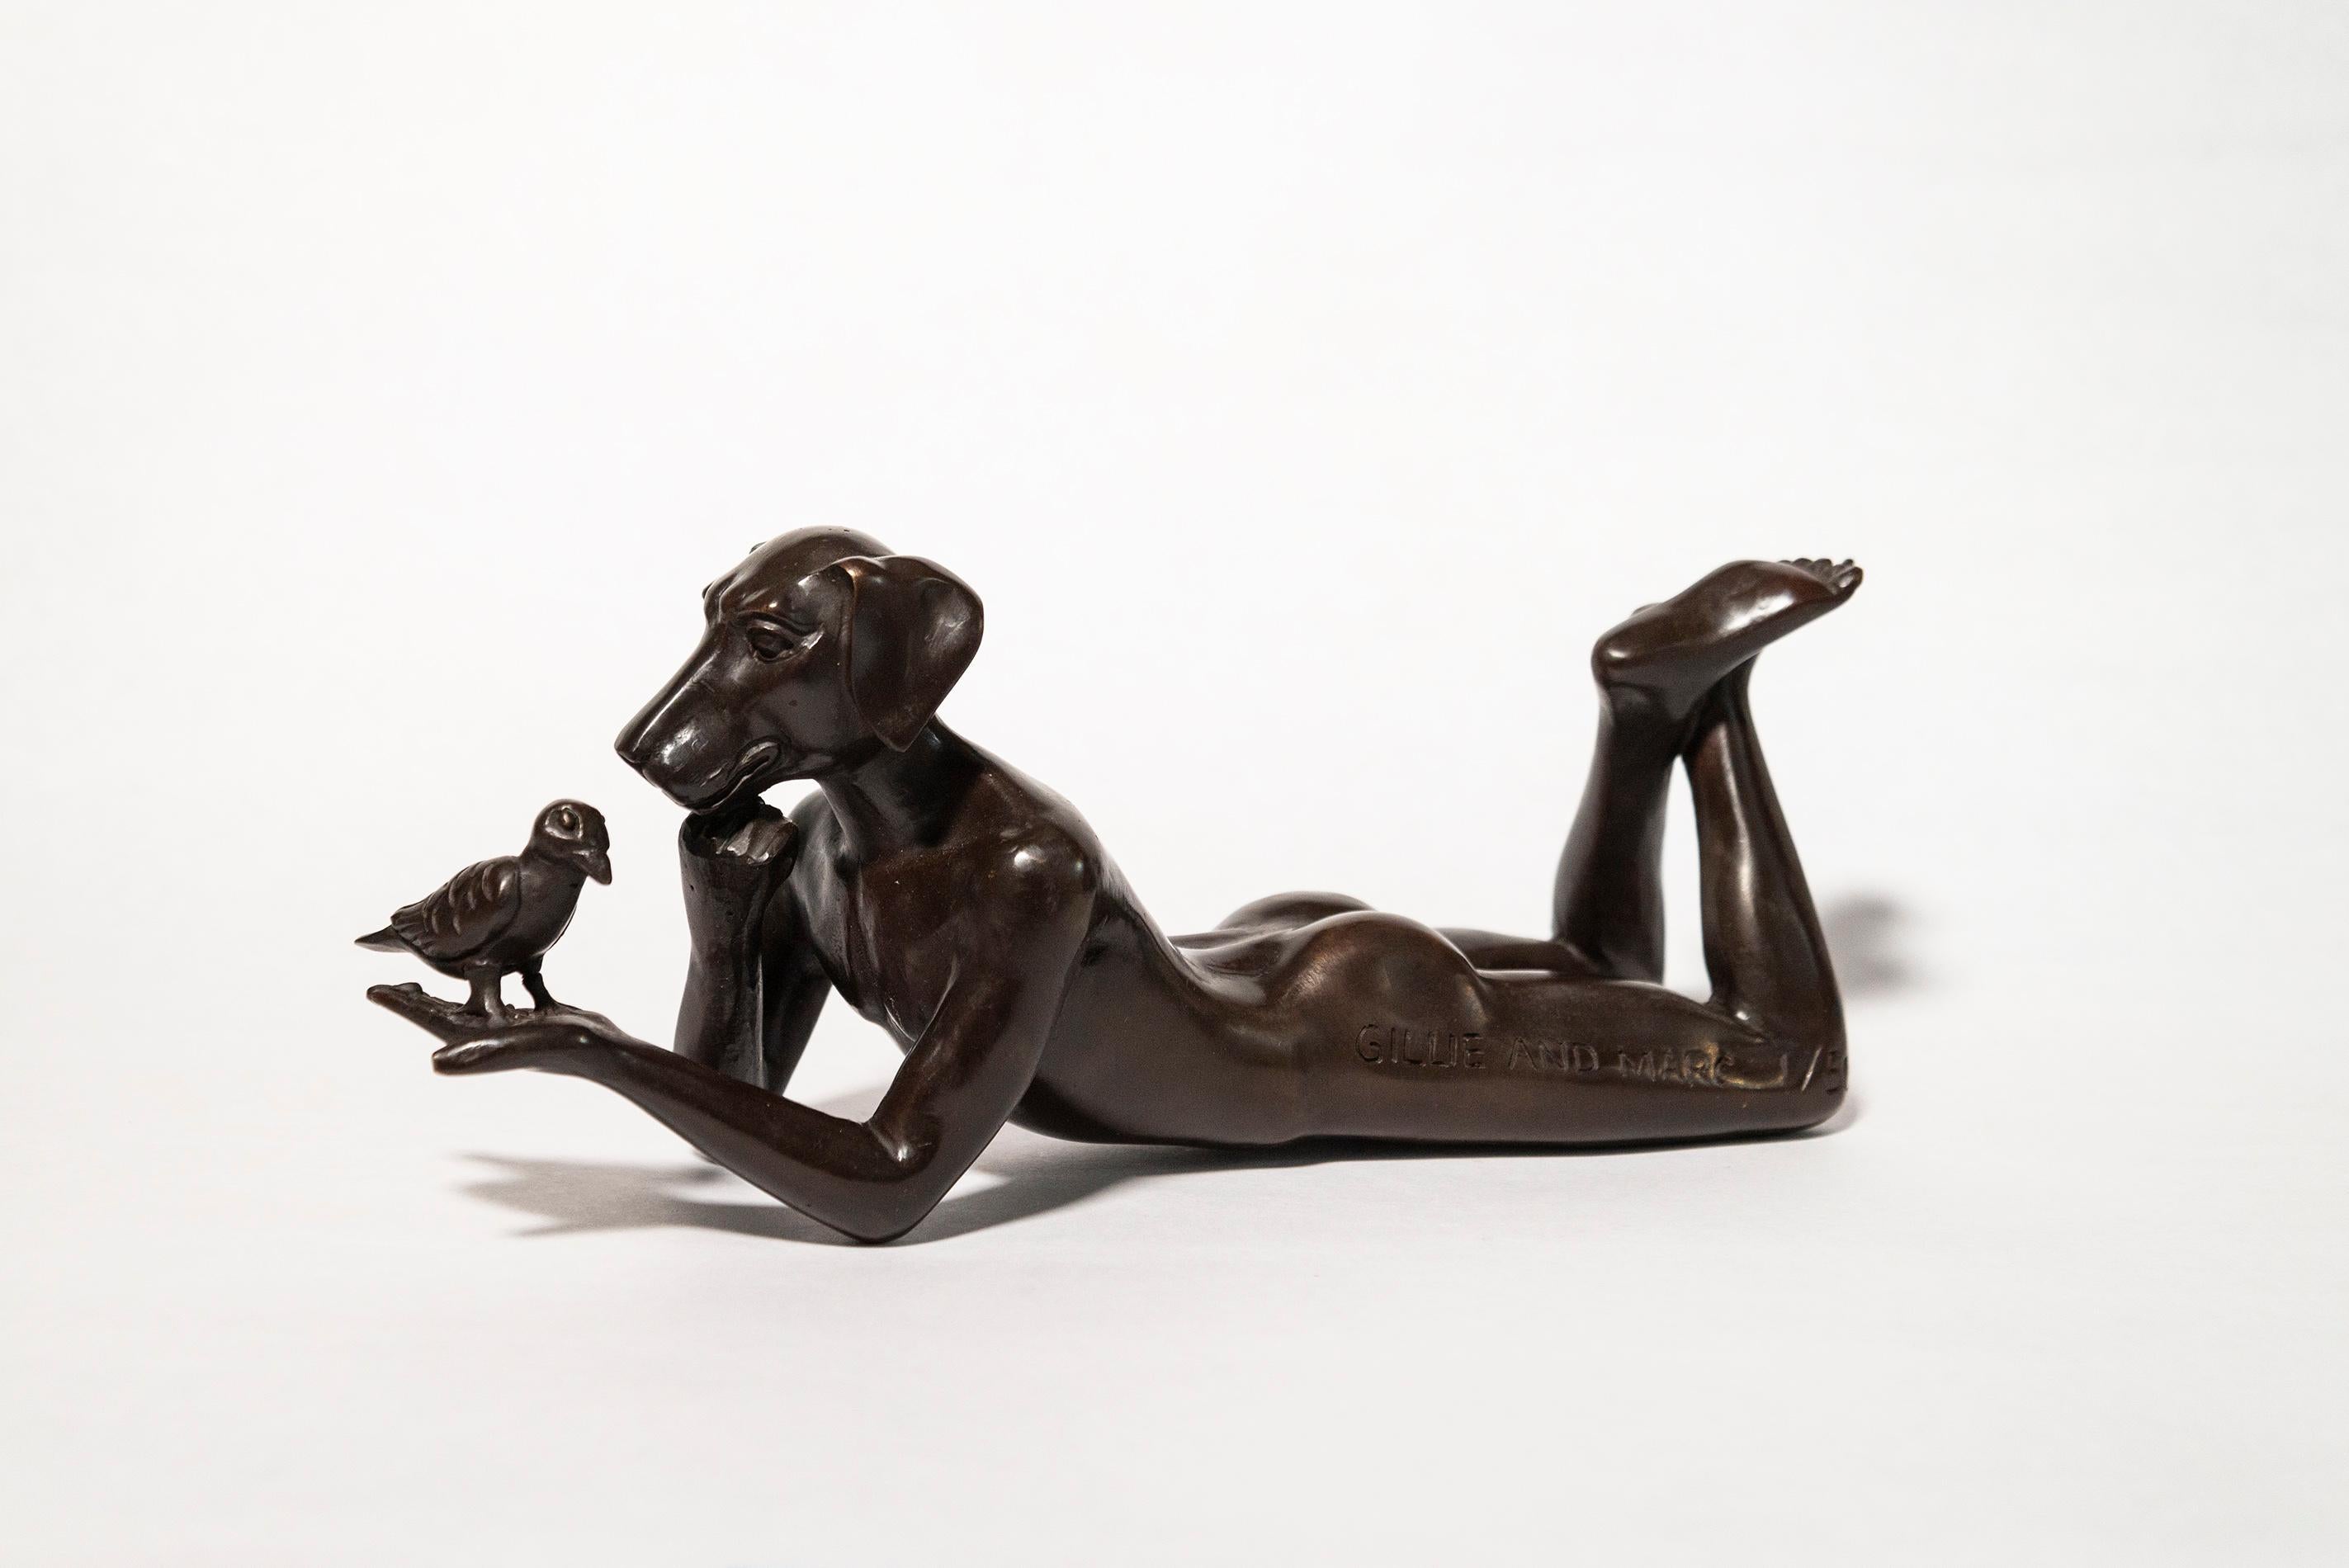 Gillie and Marc Schattner Figurative Sculpture - Dogman thought a bird in the hand is always better 1/50 - bronze sculpture